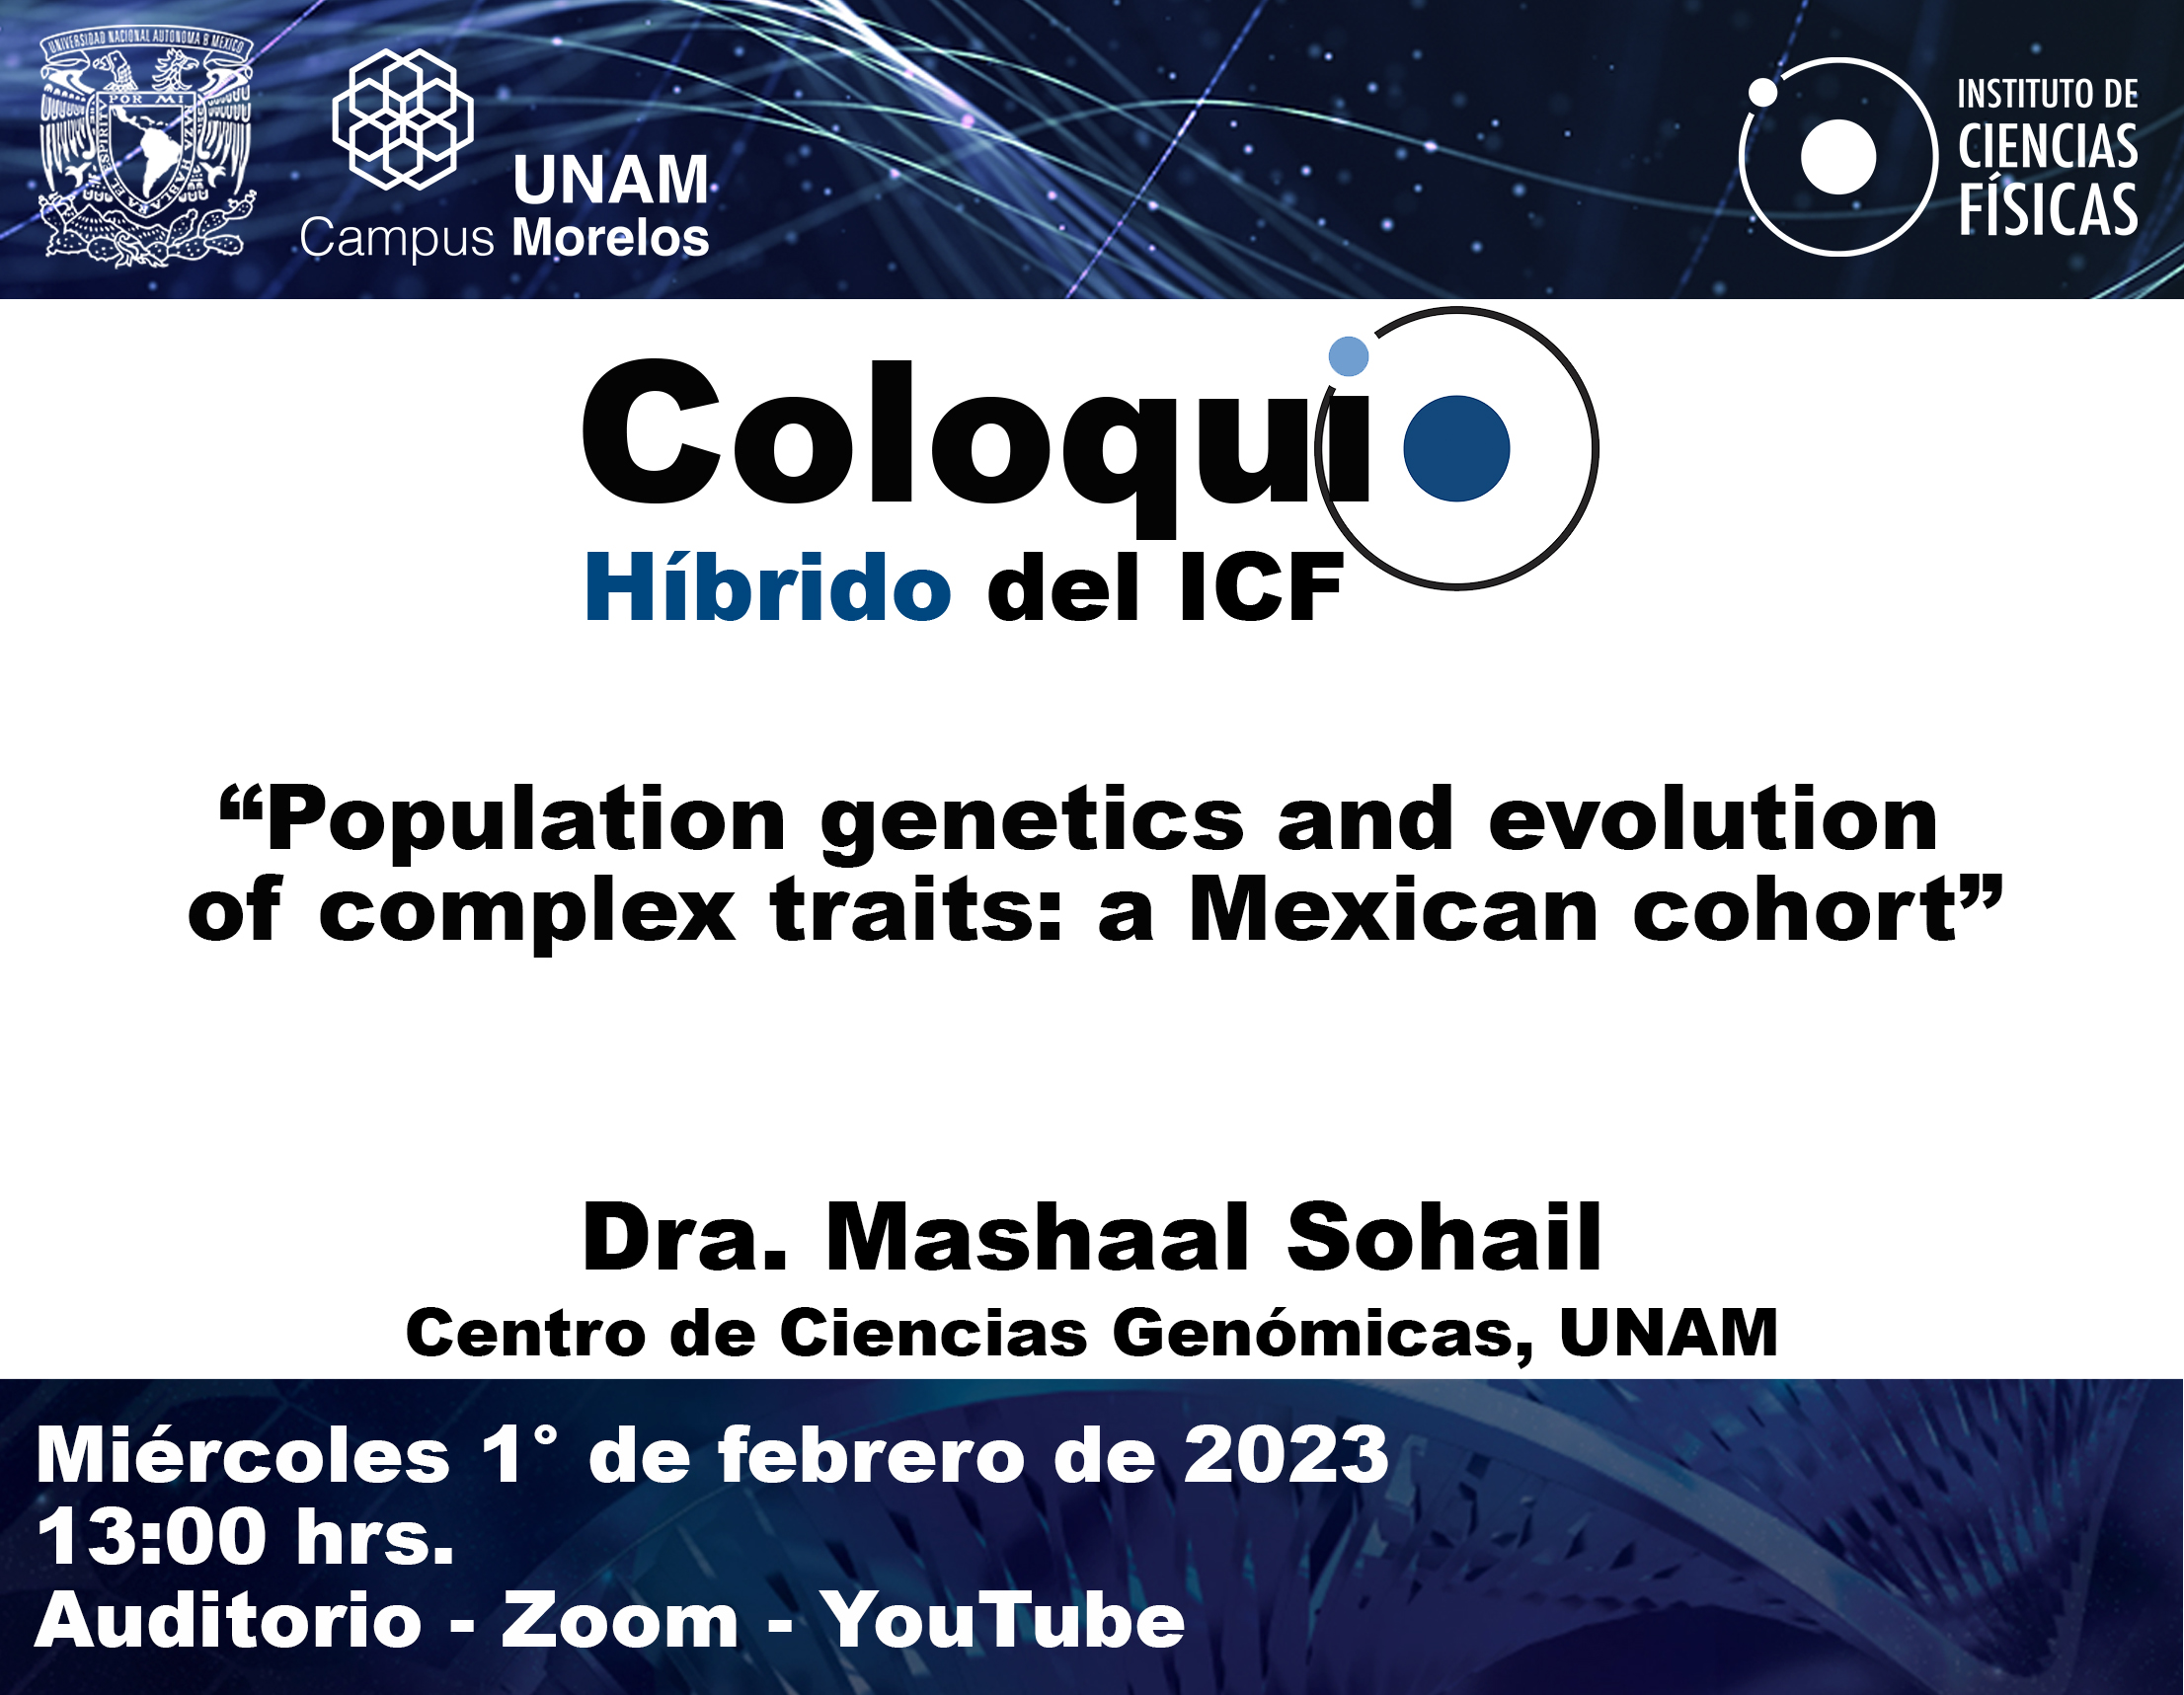 “Population genetics and evolution of complex traits: a Mexican cohort”